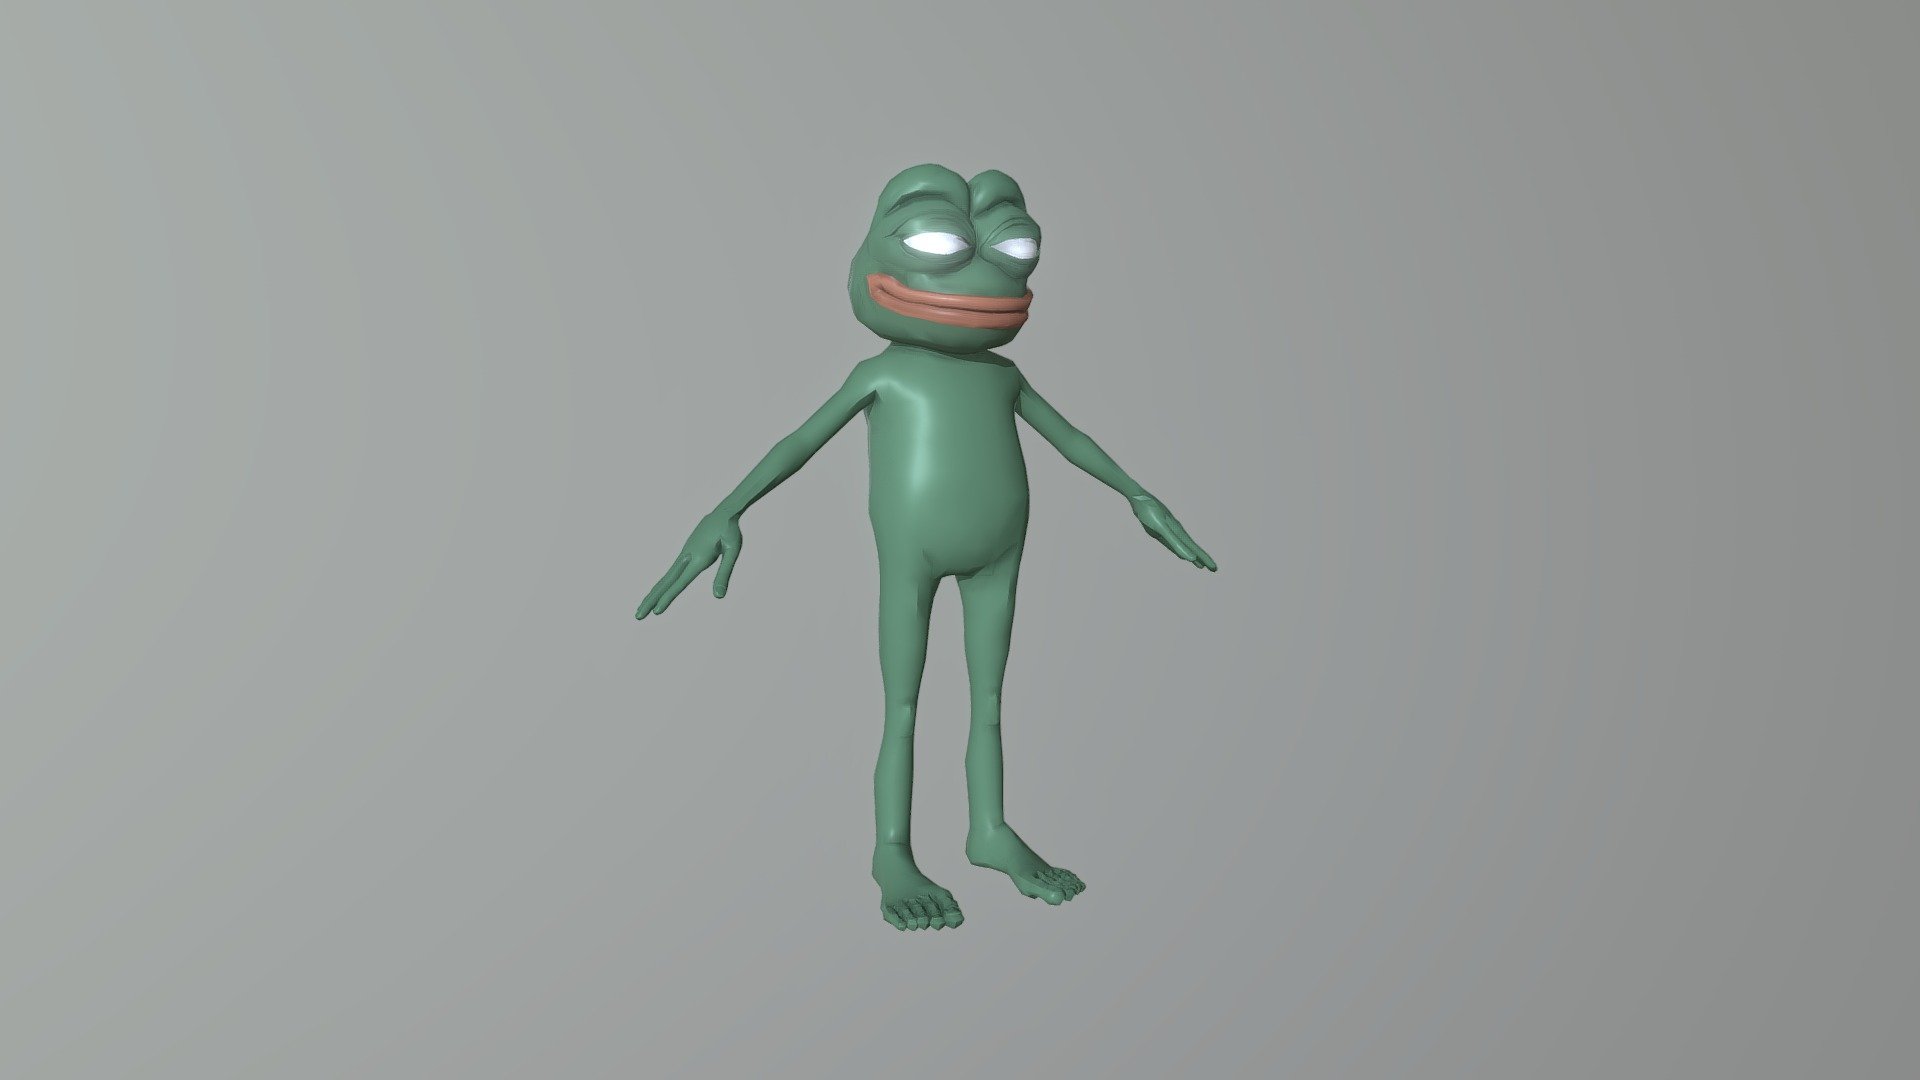 Pepe The Frog